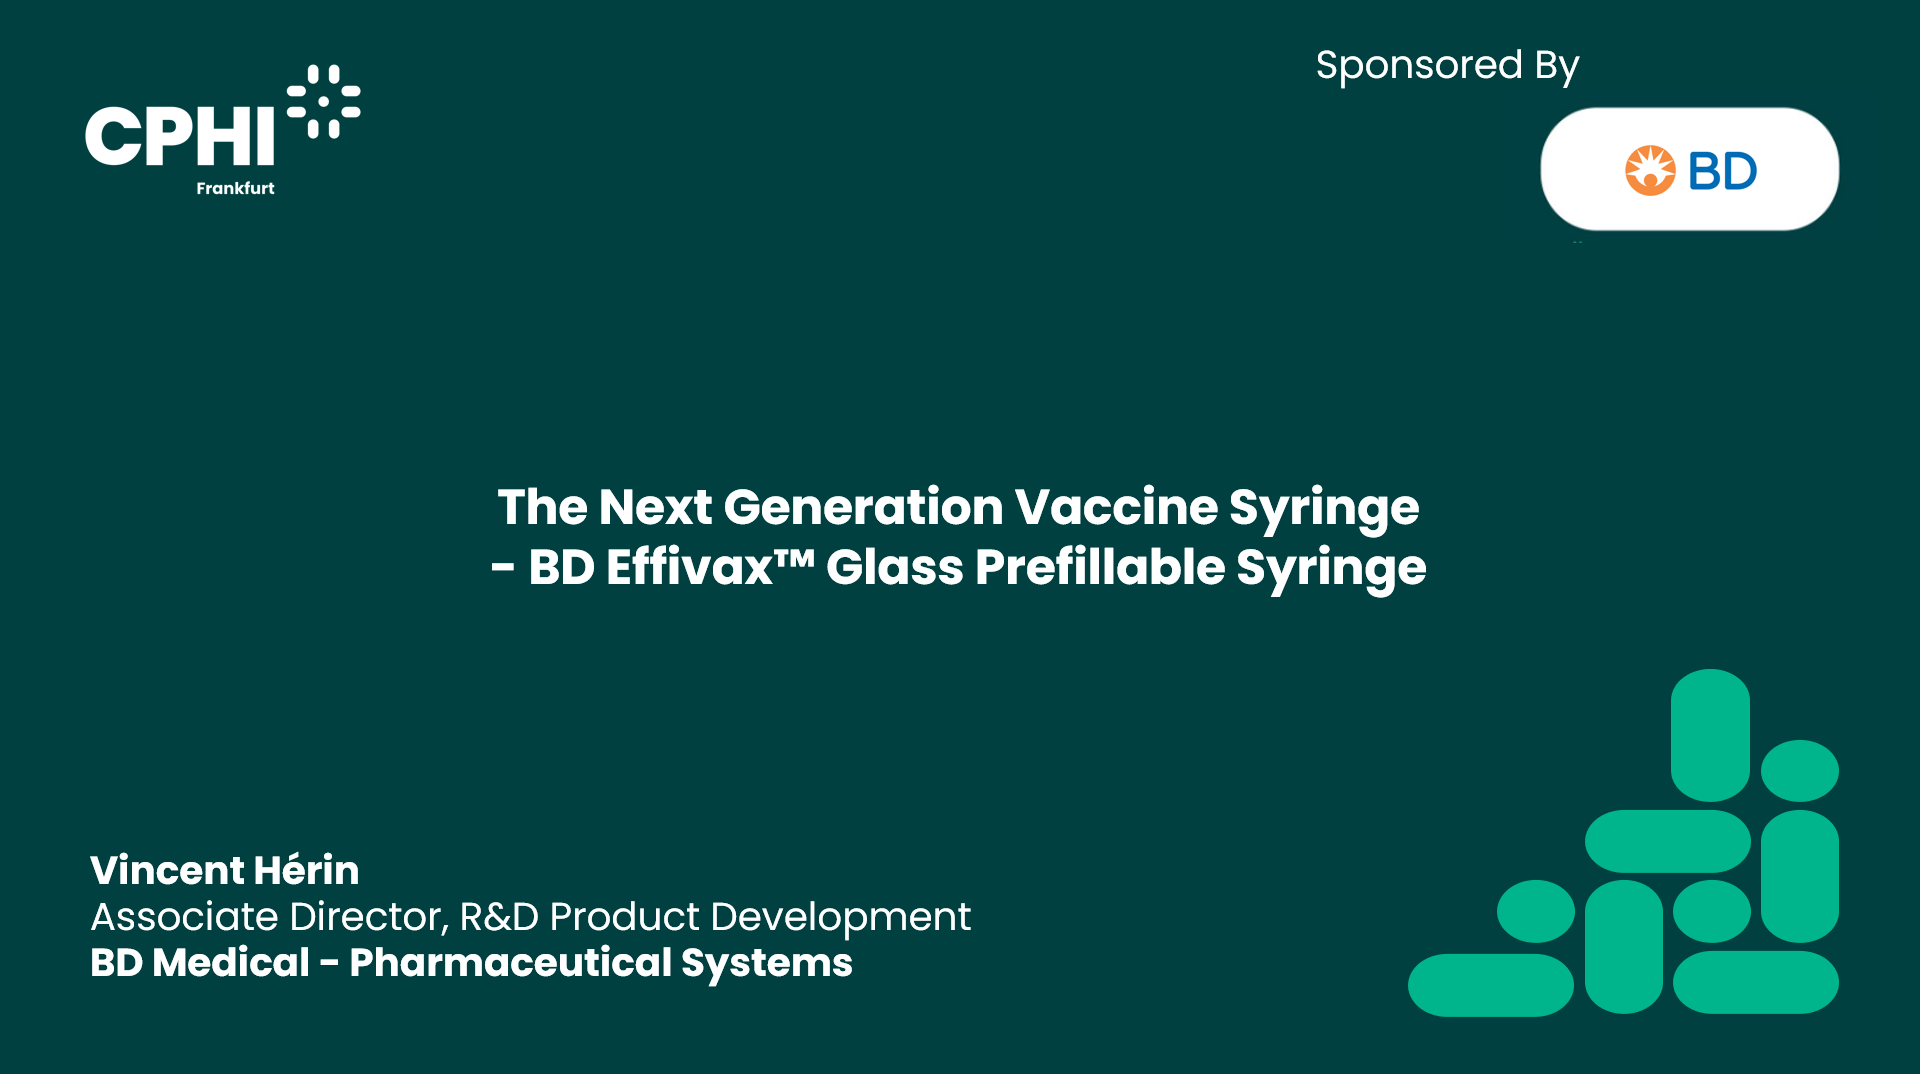 The next generation vaccine syringe - BD Effivax™ Glass Prefillable Syringe